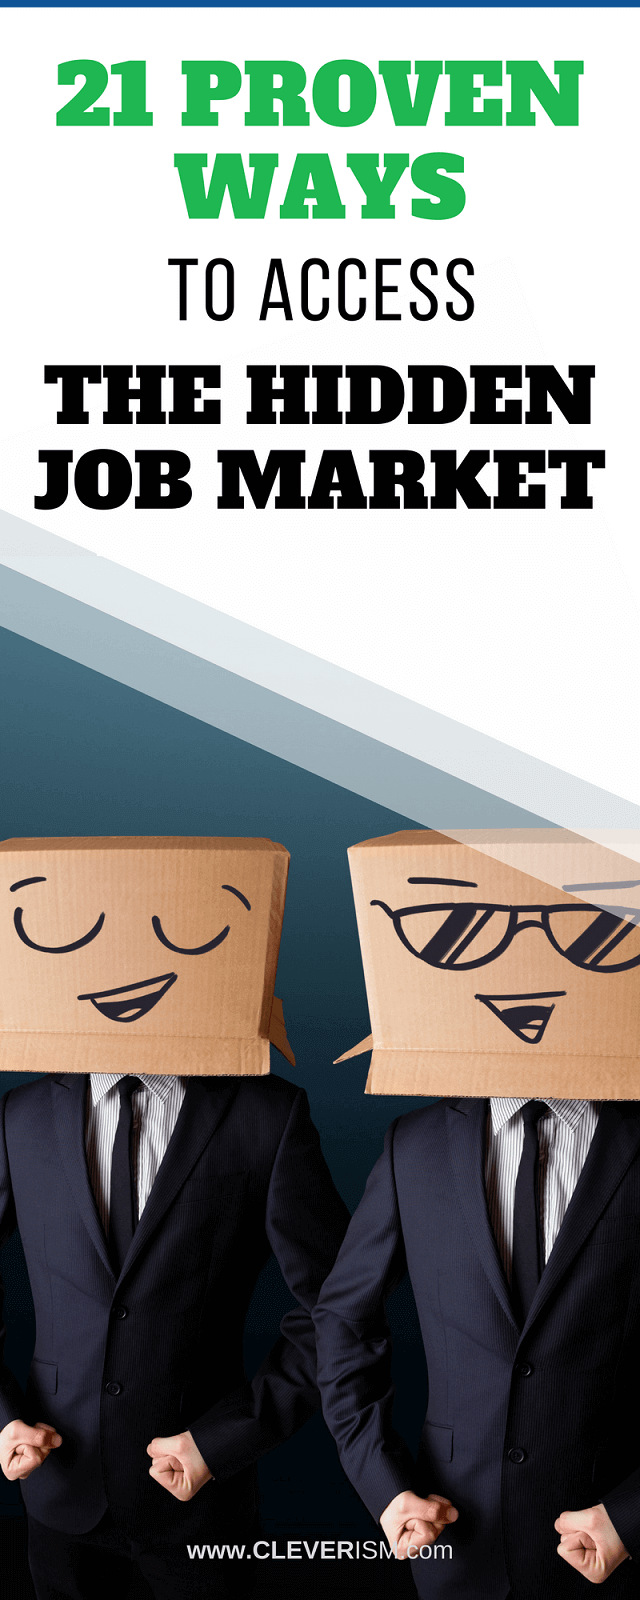 Penetrate hidden job market